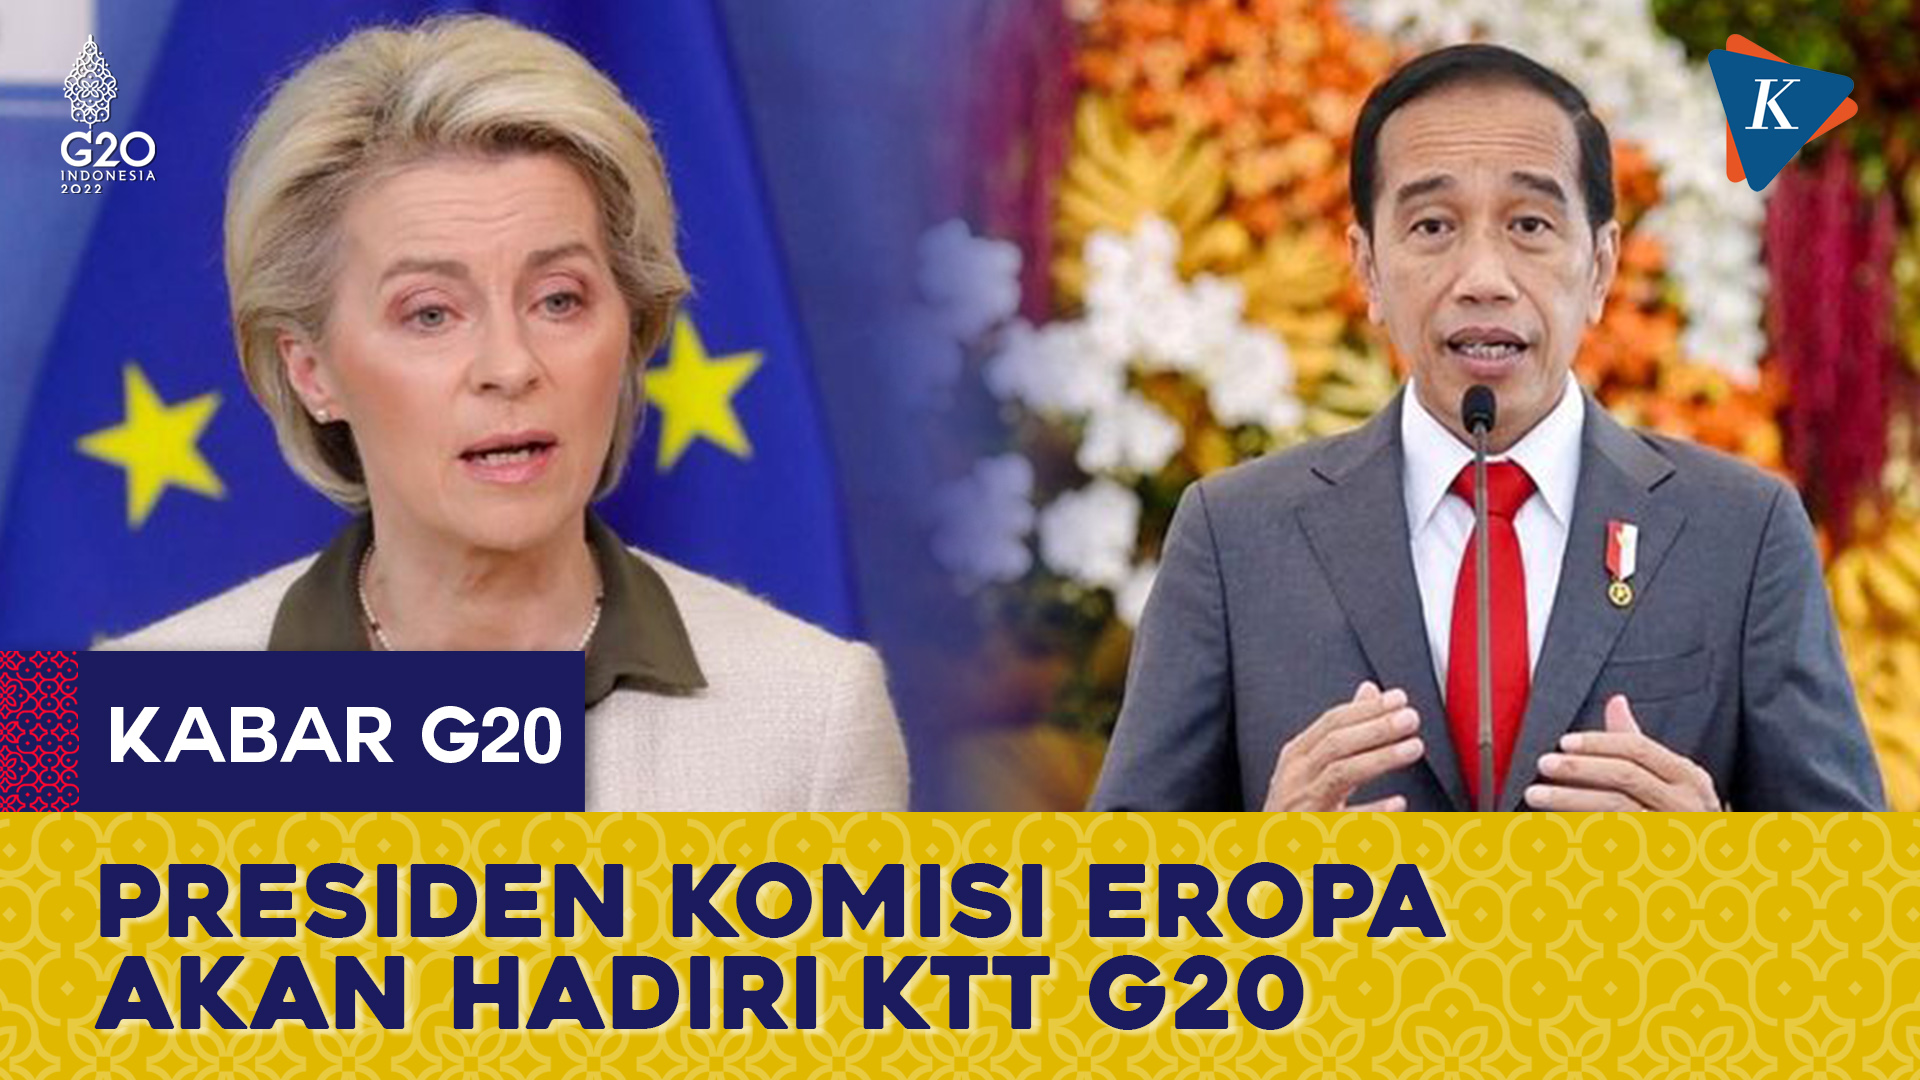 Presiden Komisi Eropa Akan Hadiri KTT G20, Indonesia Merasa Terhormat